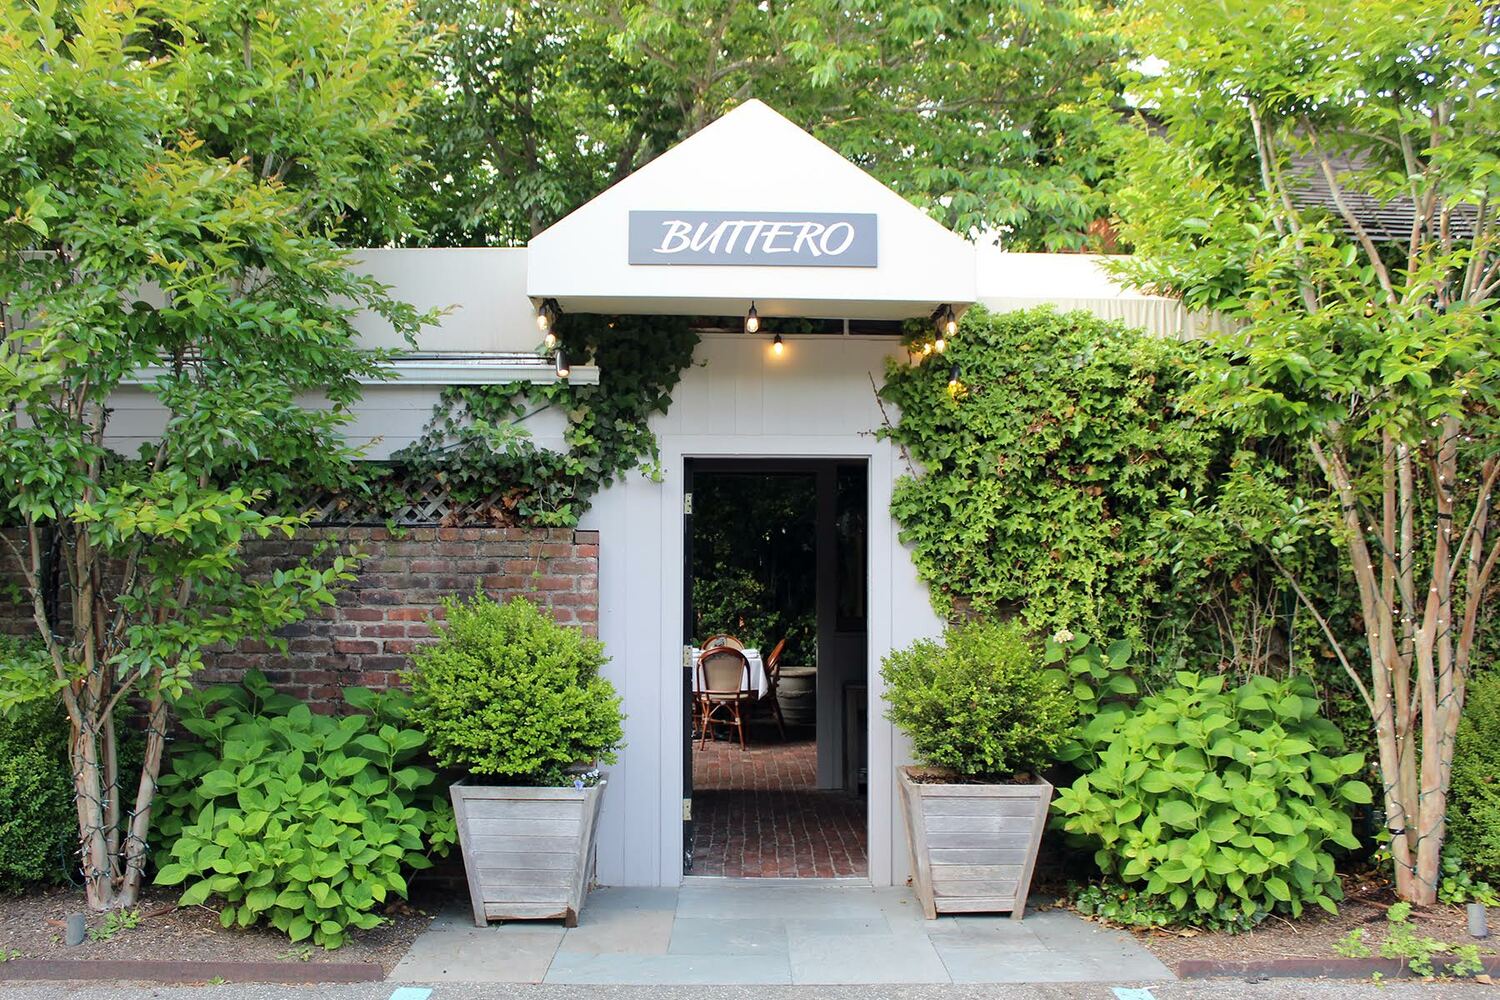 Buttero Italian Steakhouse has opened its doors on Race Lane in East Hampton. COURTESY BUTTERO